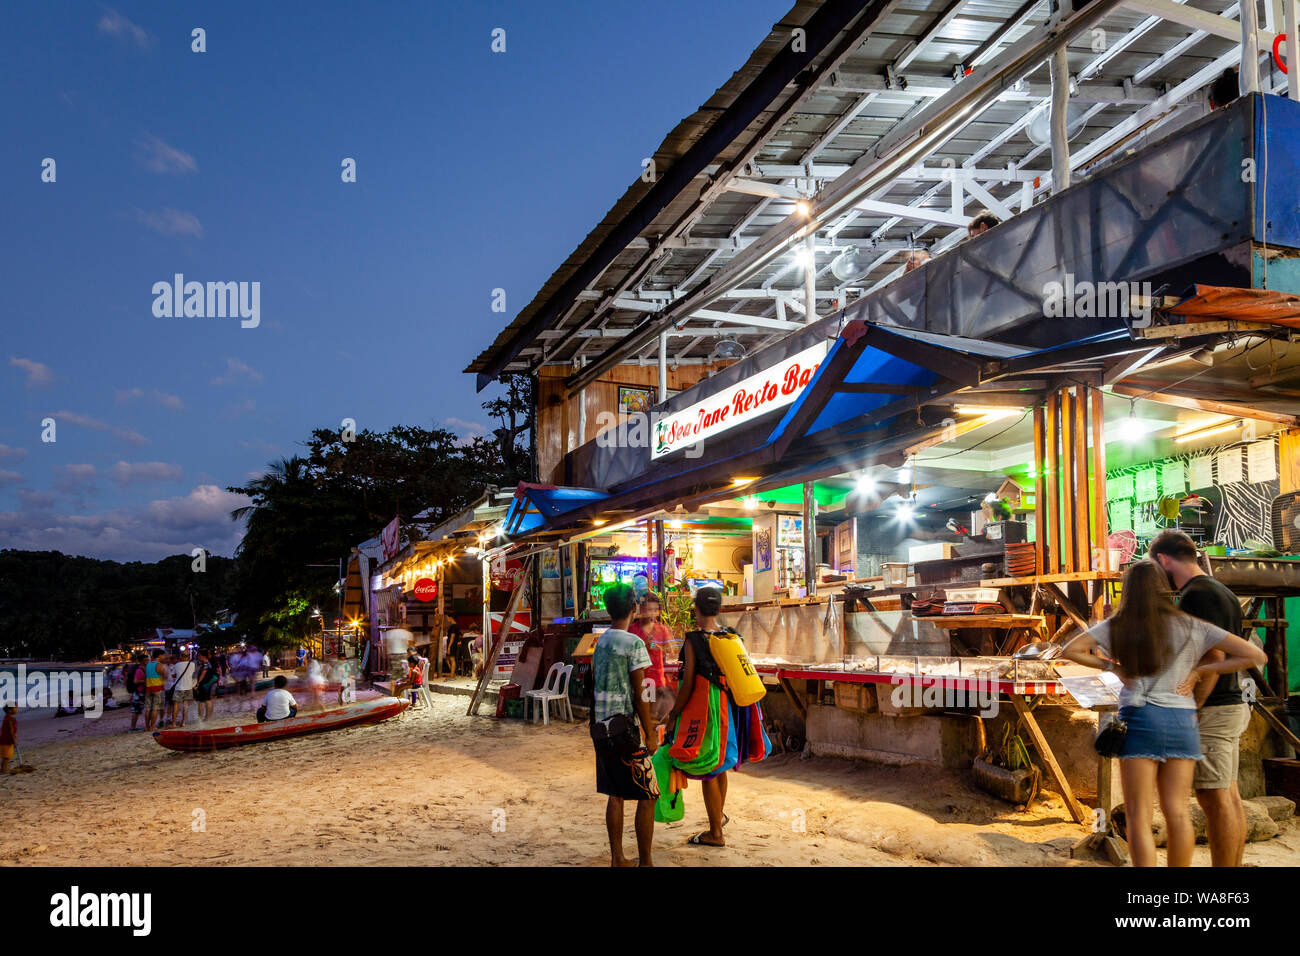 The Sea Jane Resto Bar, Beach Front Restaurant, El Nido, Palawan Island, The Philippines Stock Photo